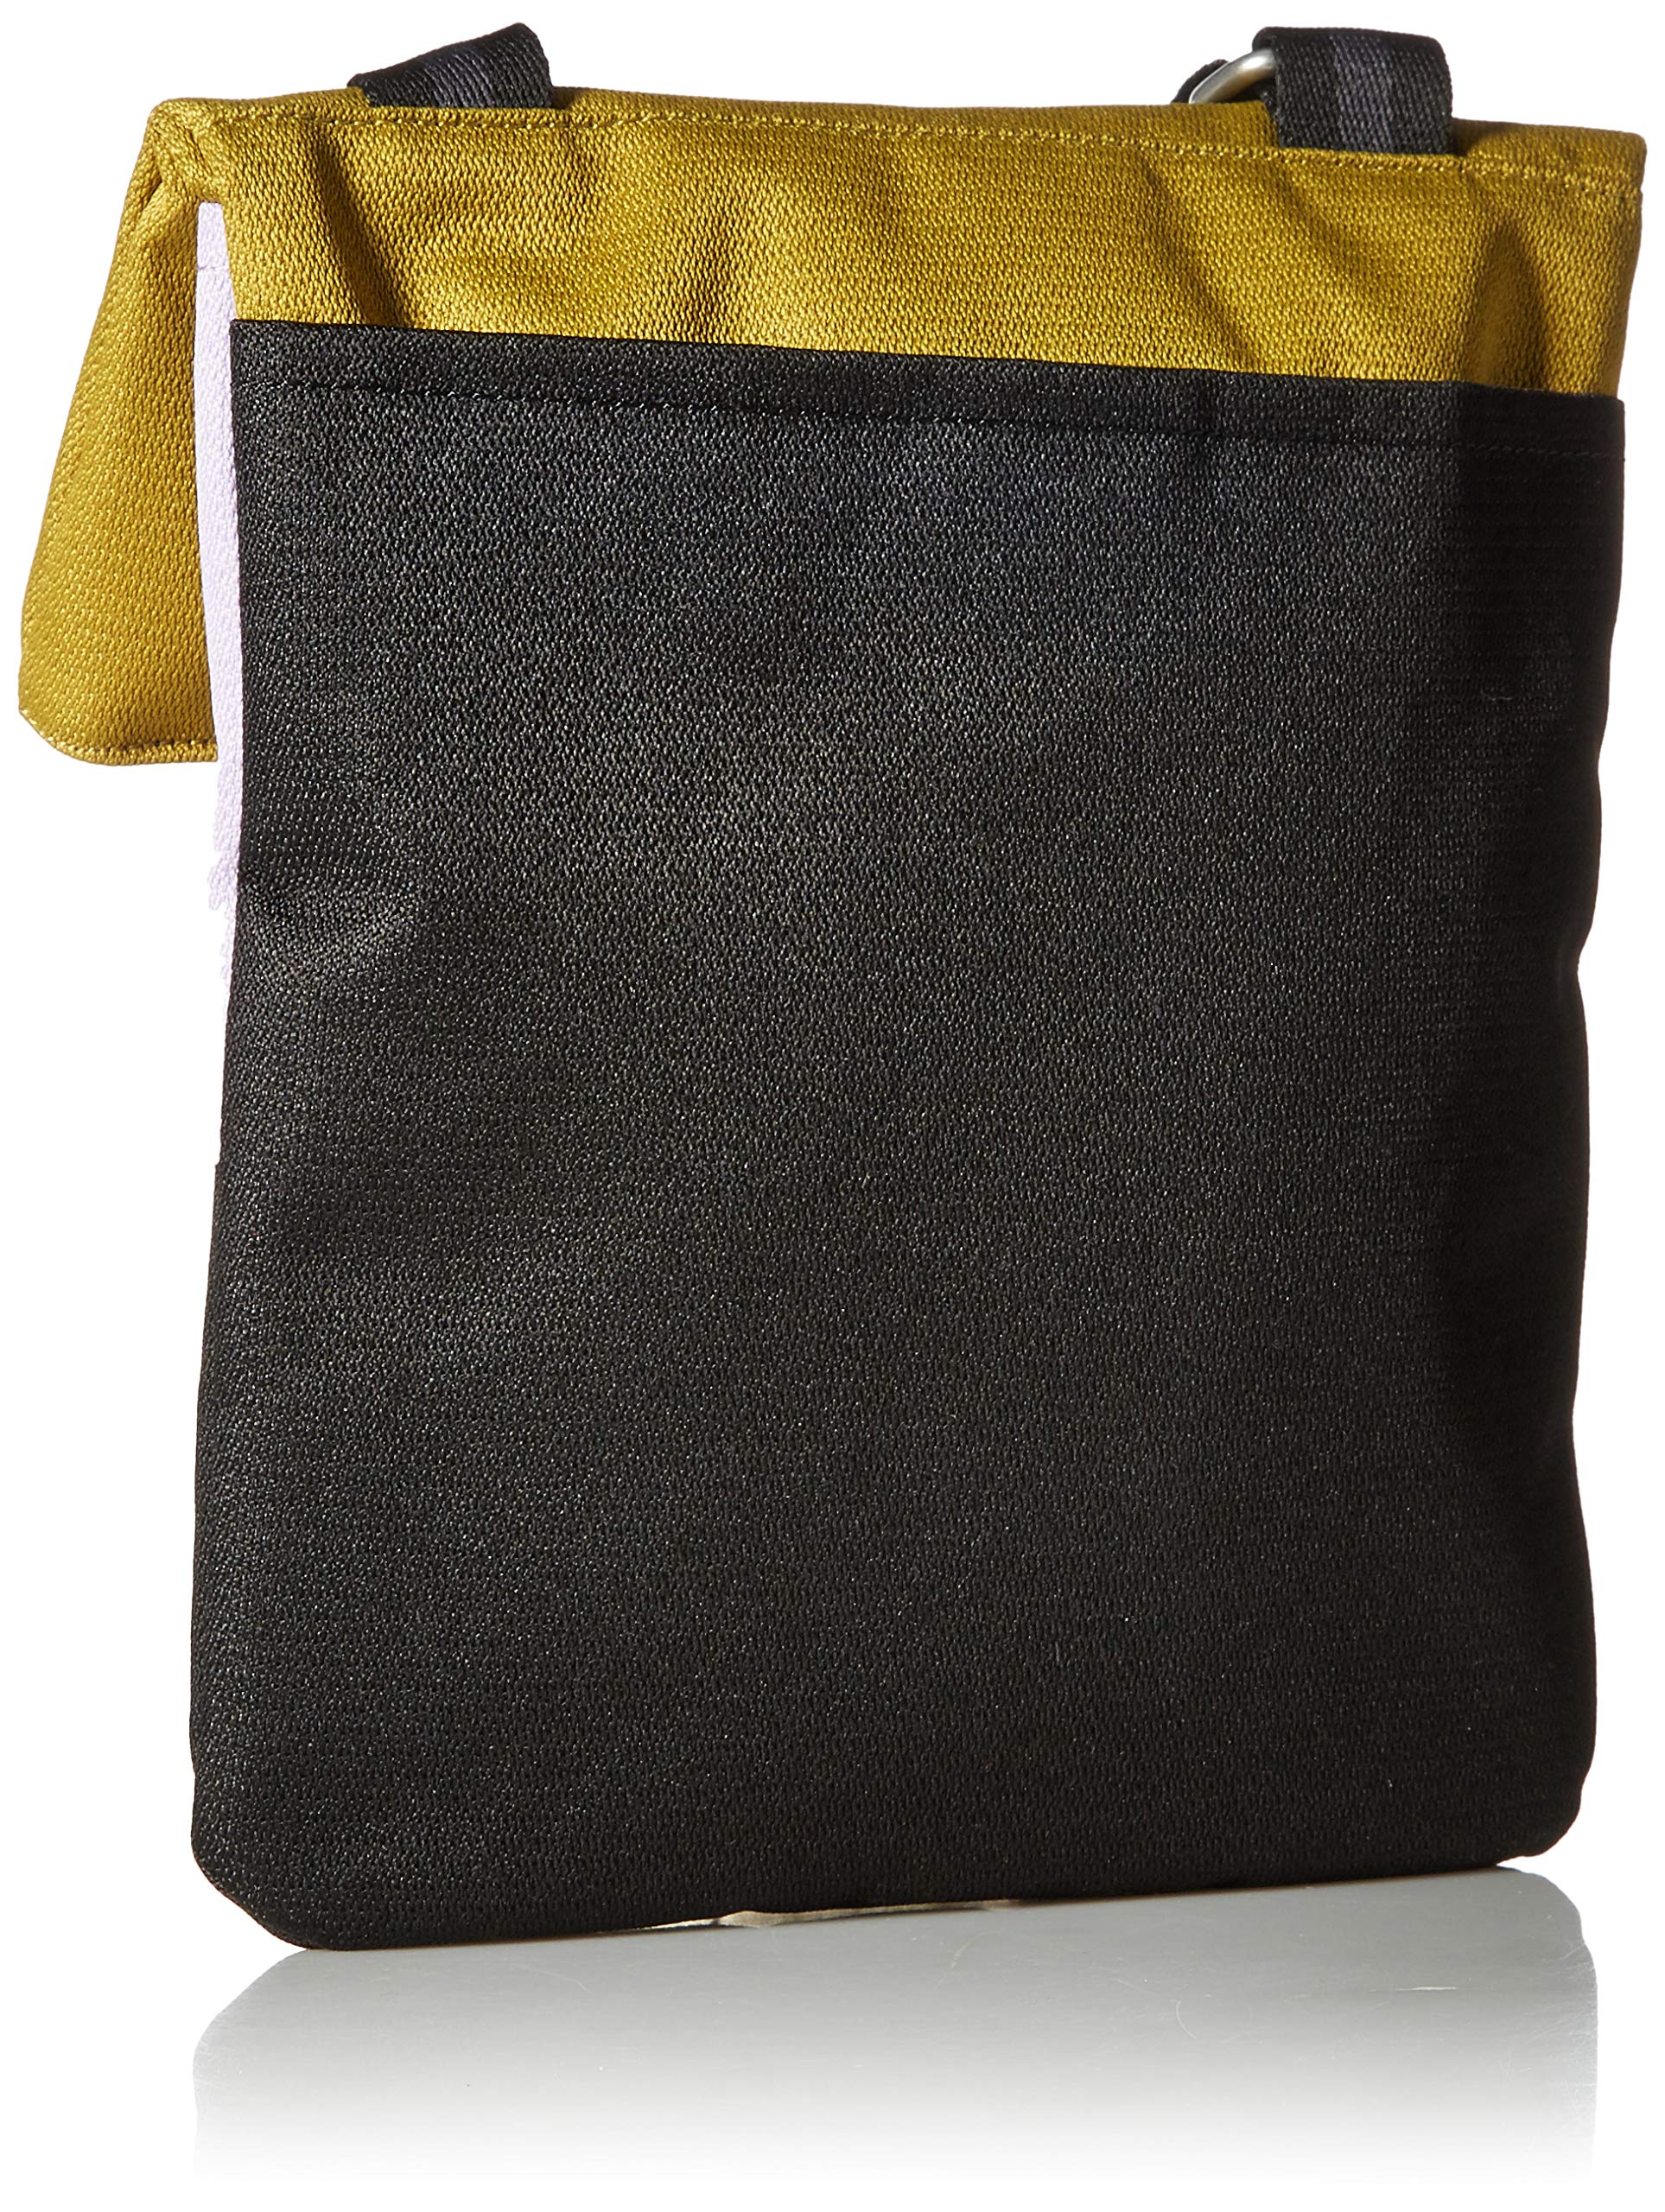 Sherpani Women's Pica Bag | eBay